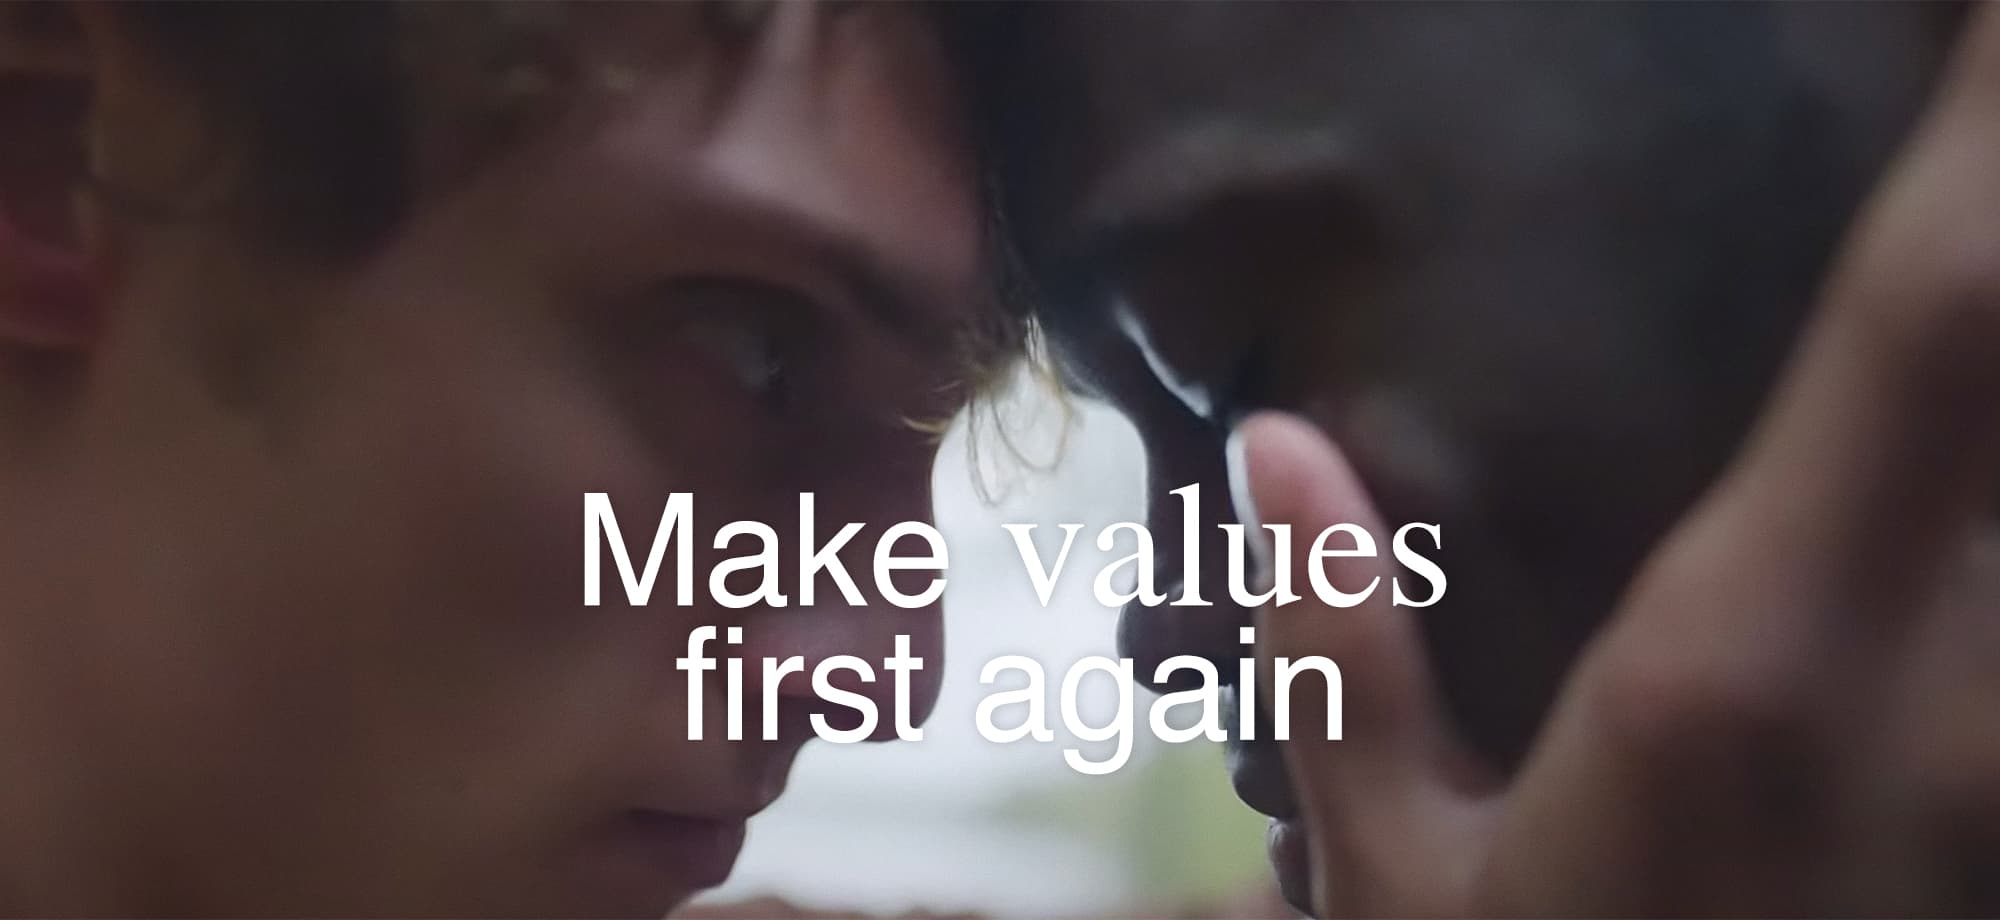 Make values first again